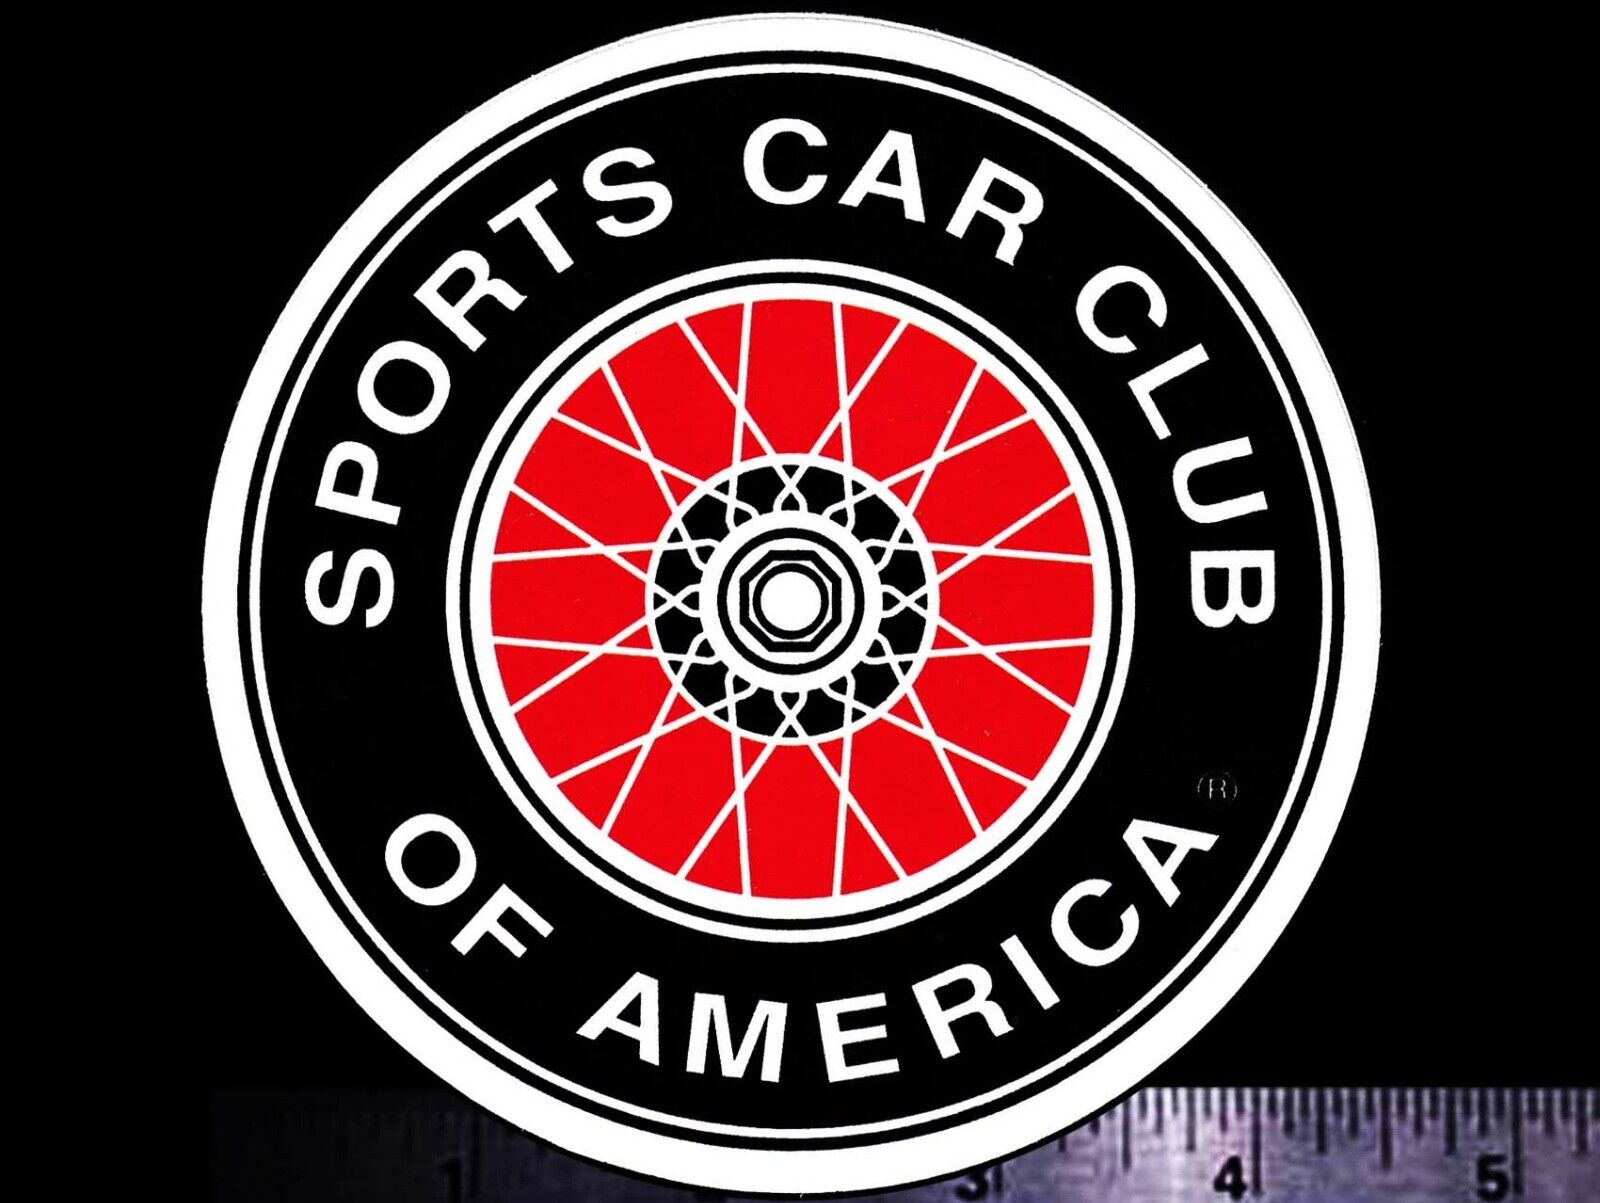 SCCA Sports Car Club Of America - Original Vintage Racing Decal/Sticker - 4 1/2”